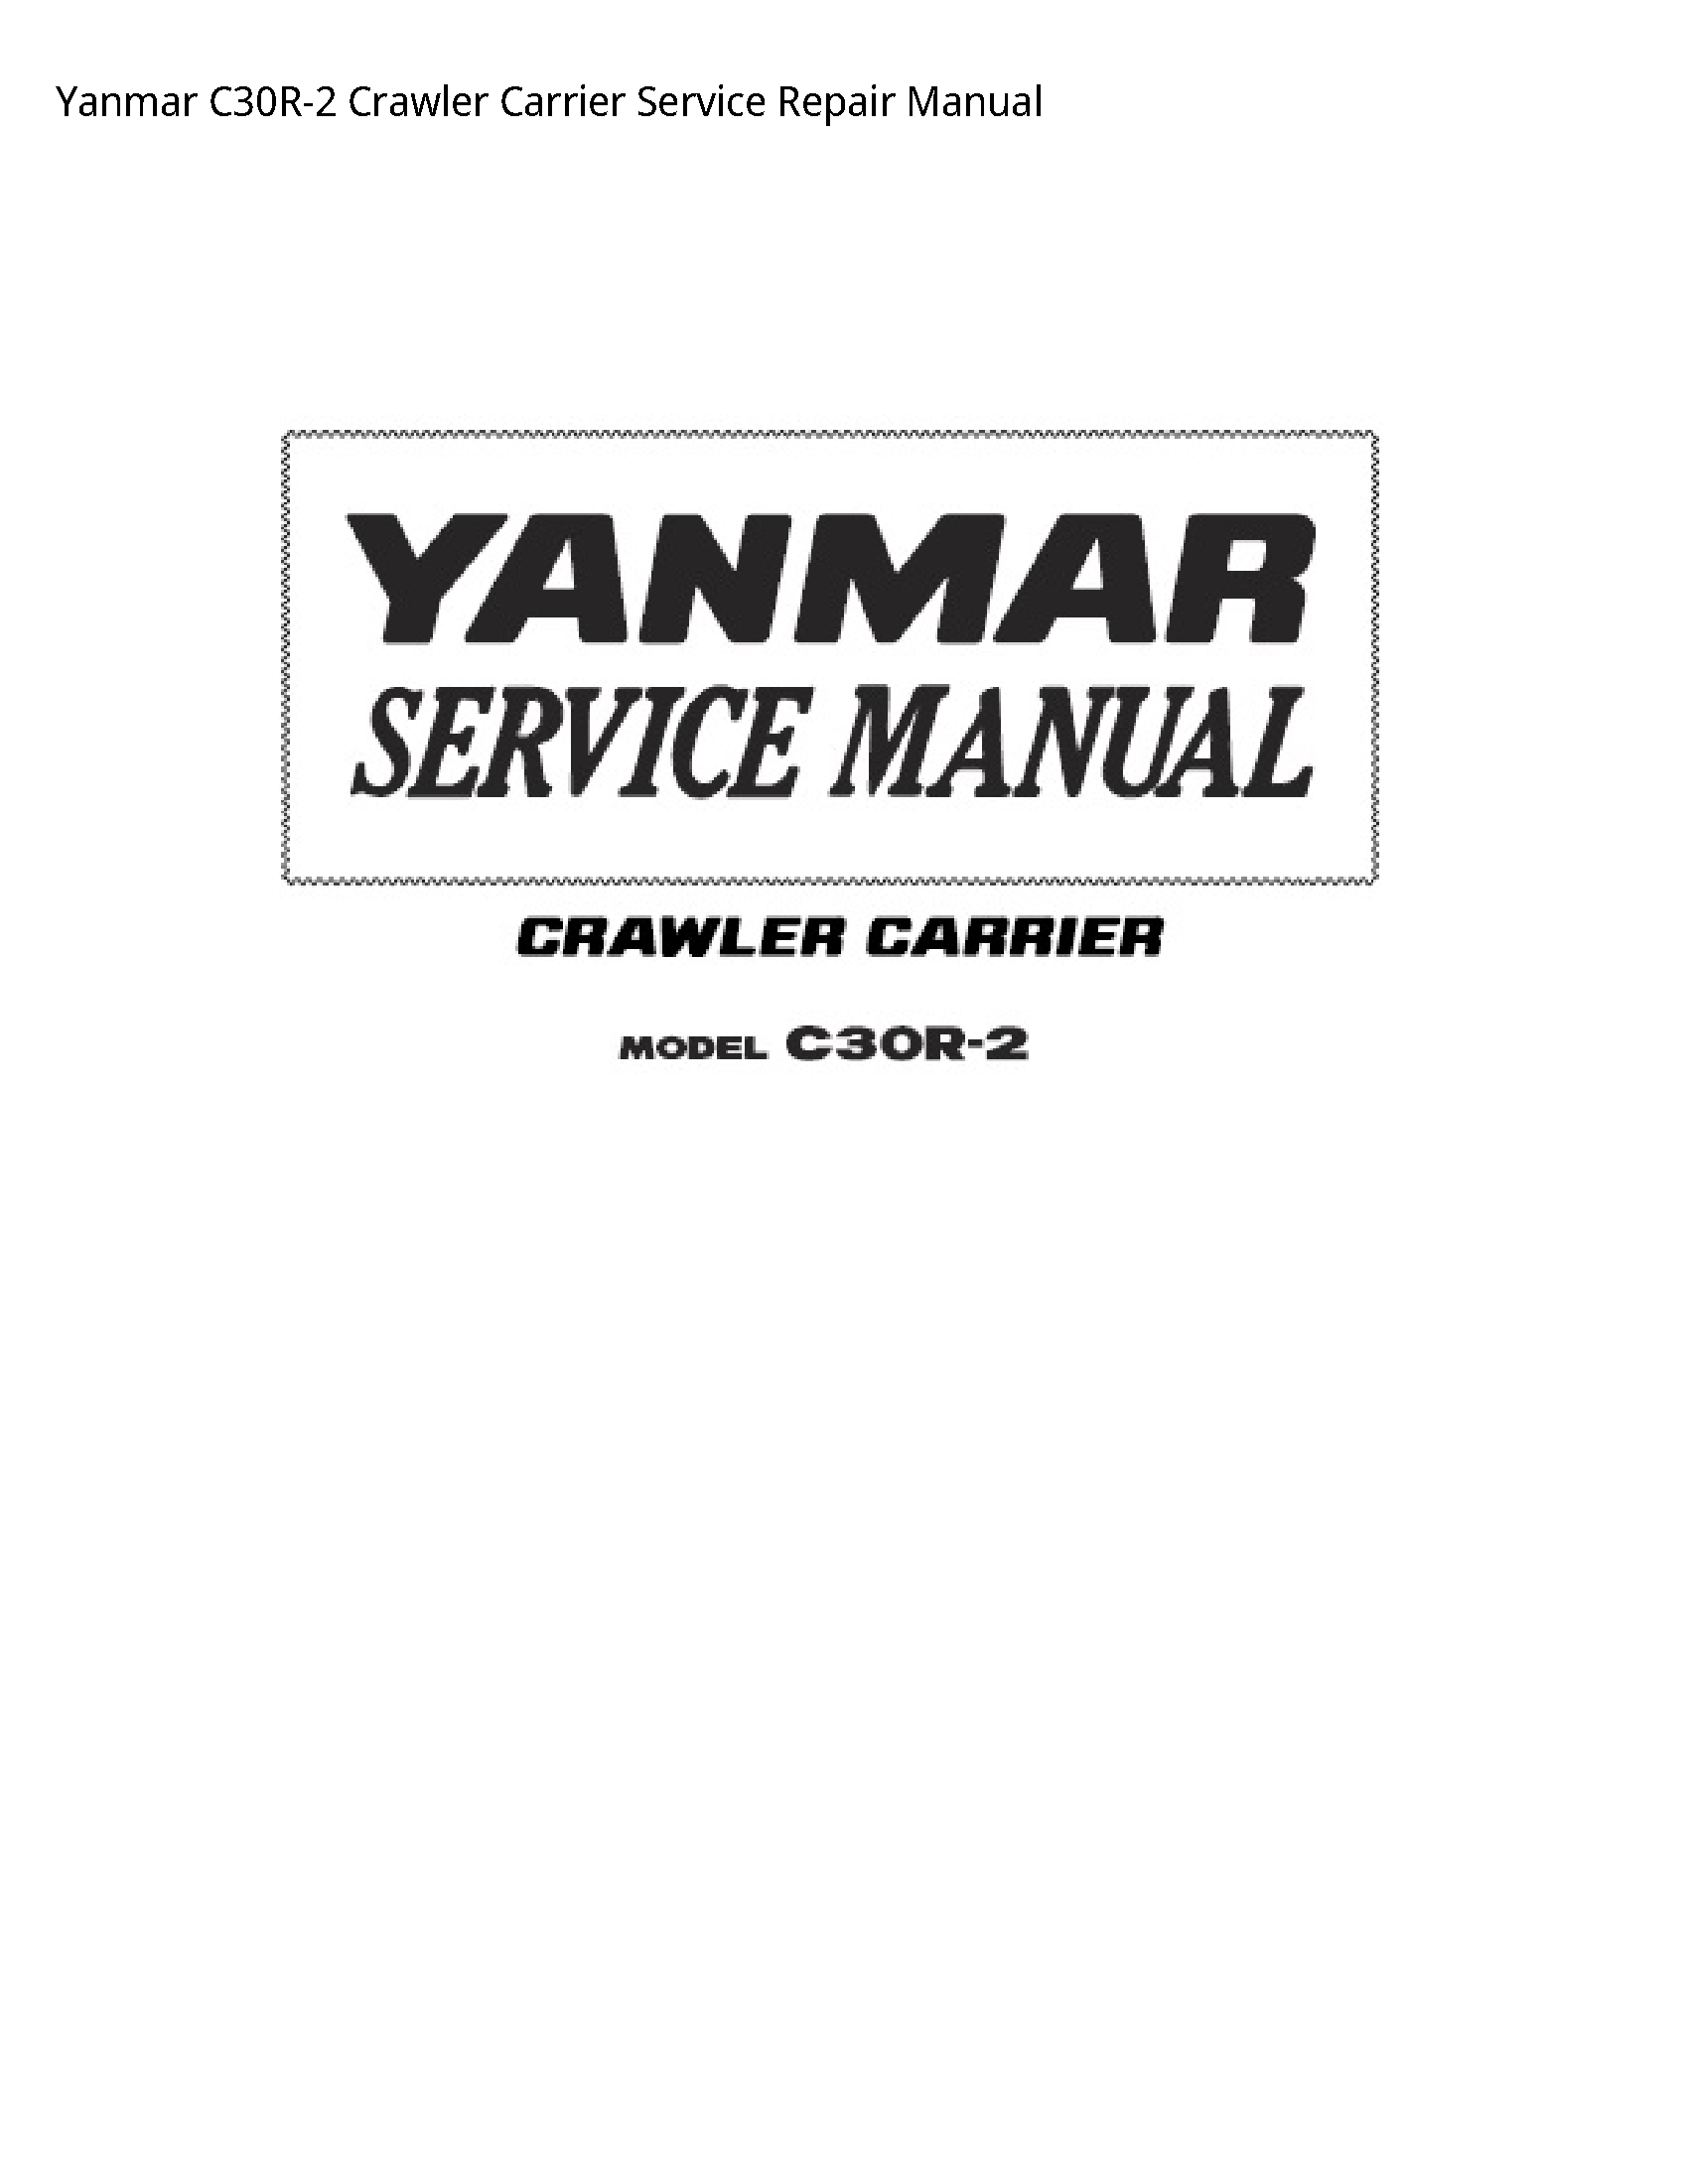 Yanmar C30R-2 Crawler Carrier manual